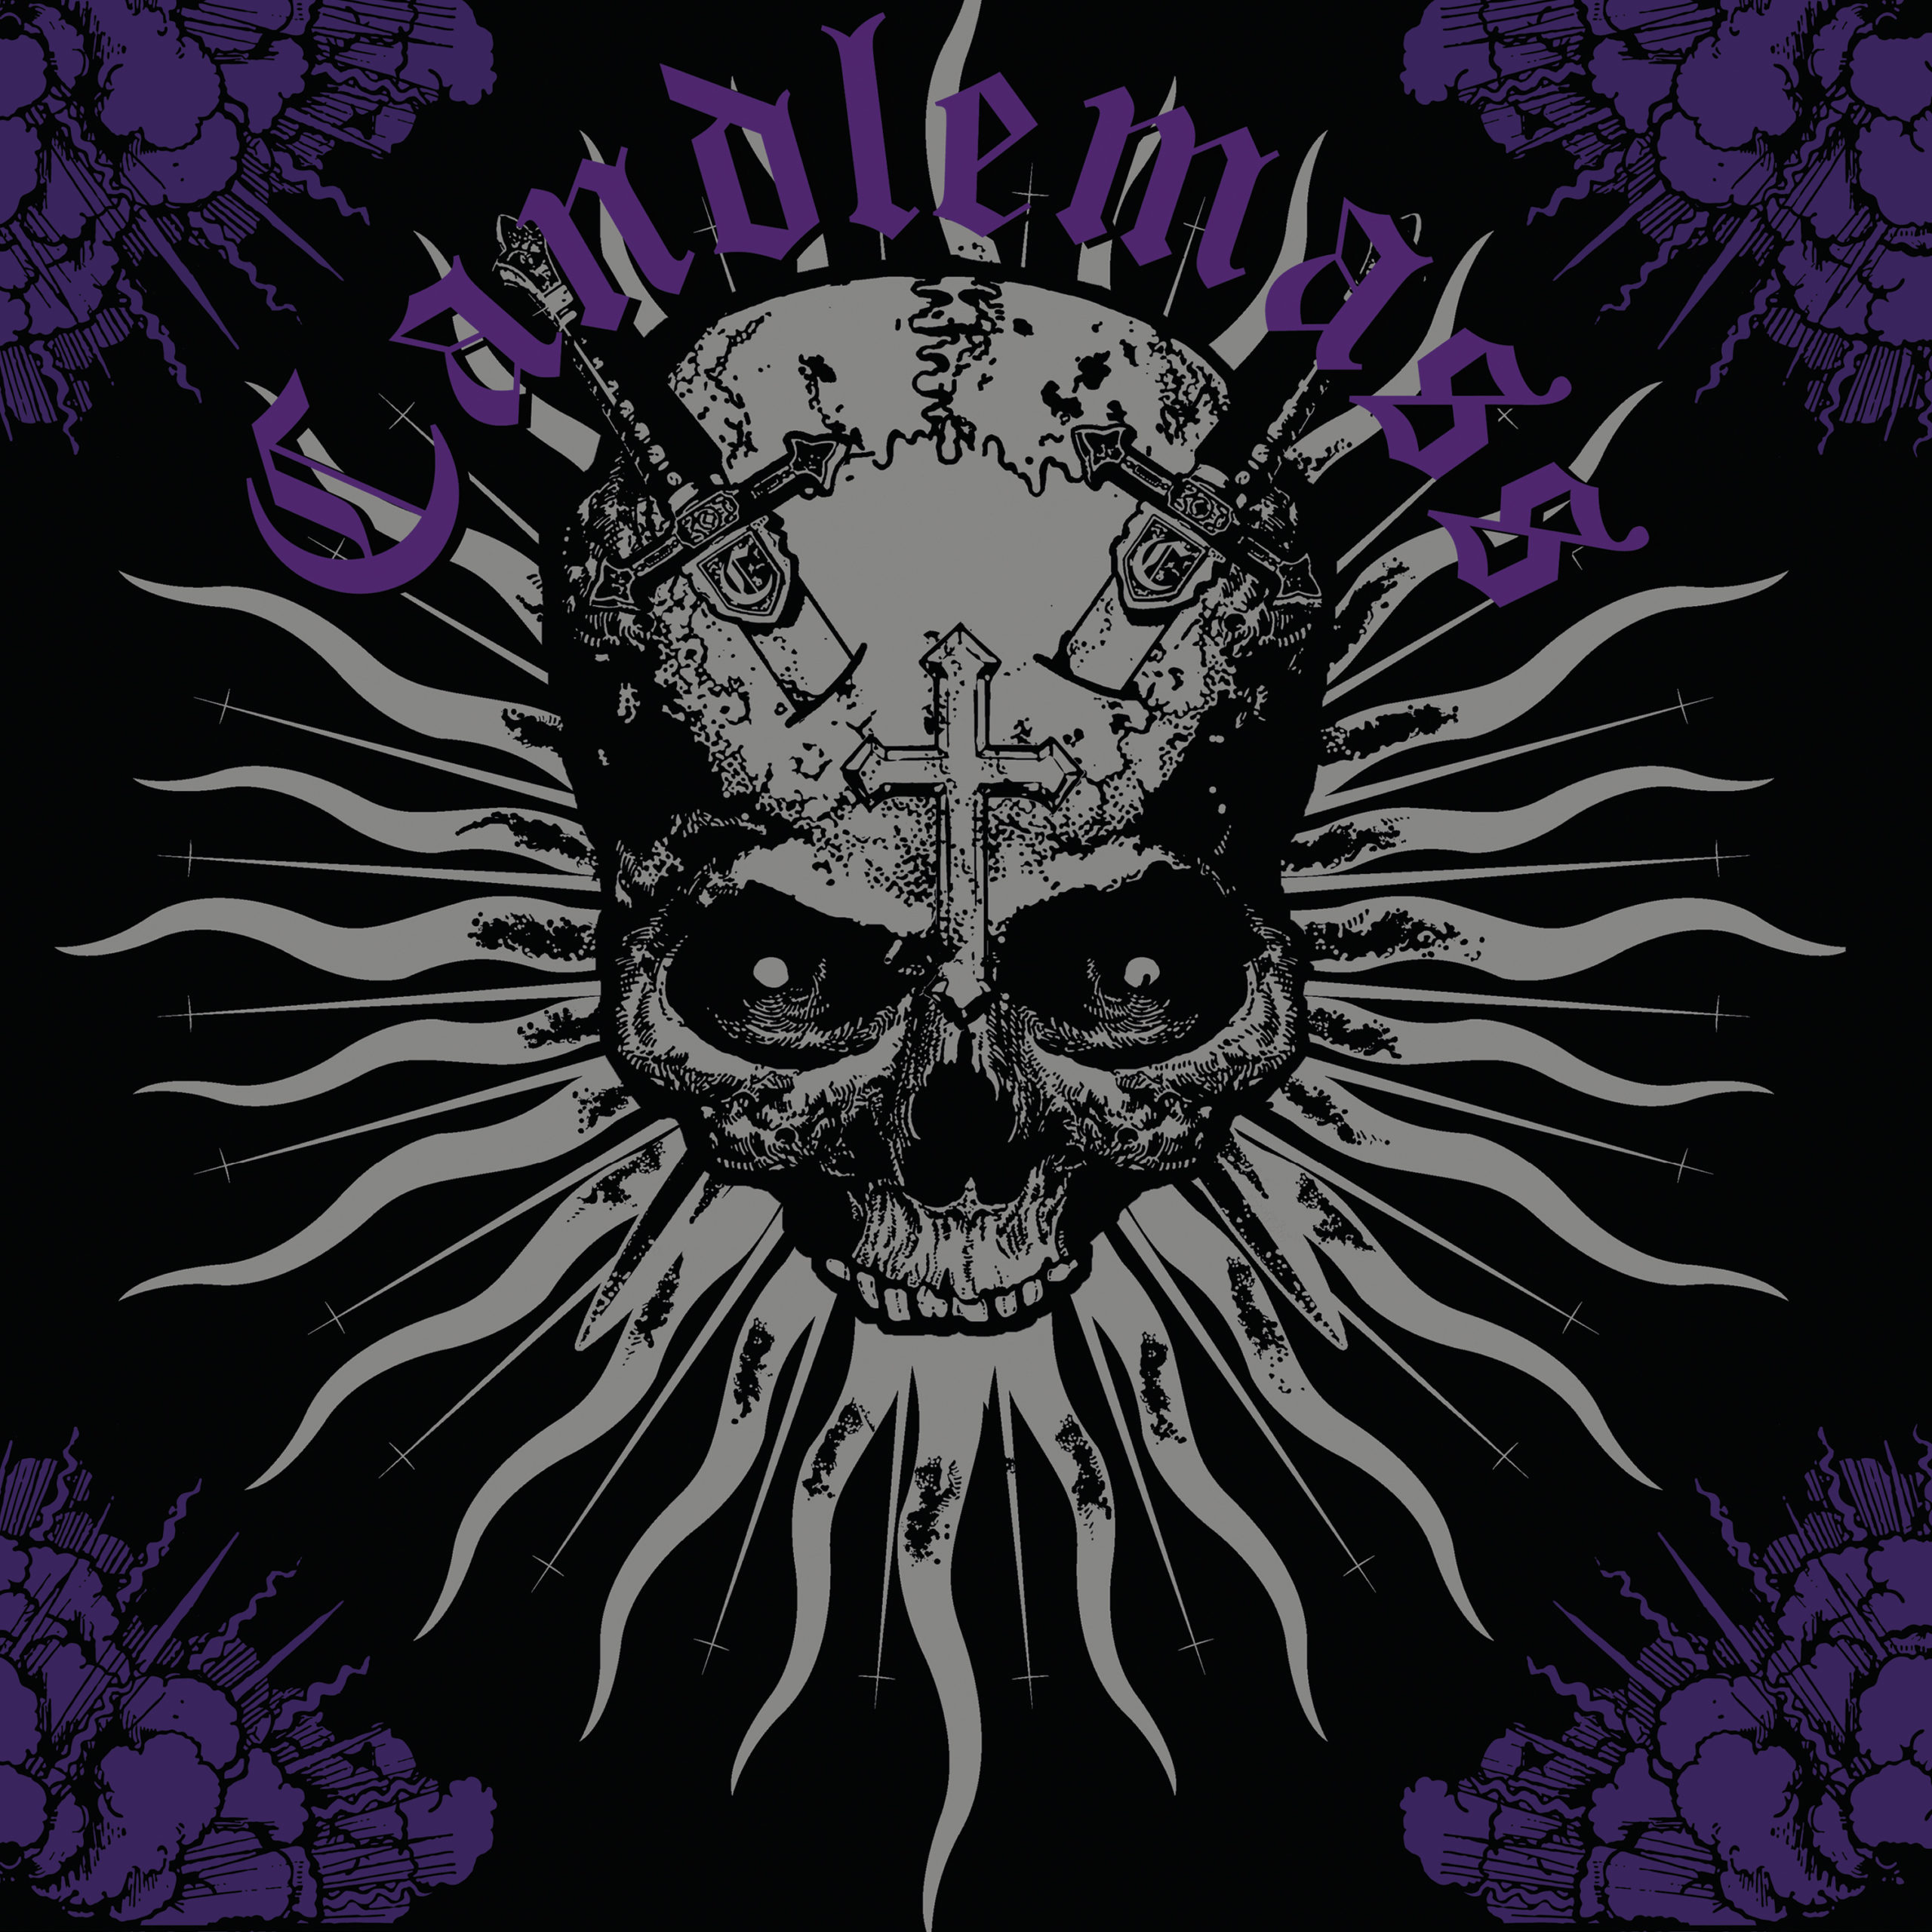 Candlemass – Sweet evil sun (doom metal)